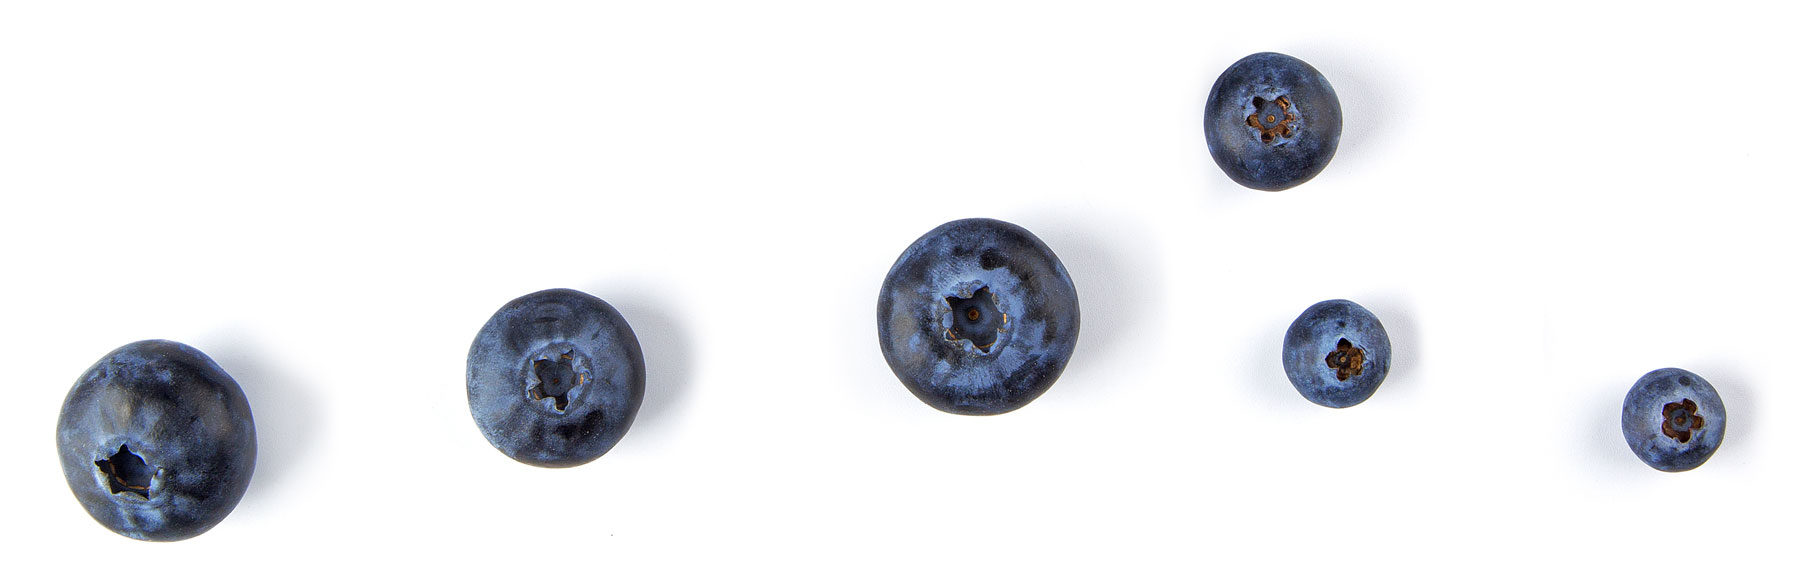 blueberries-m